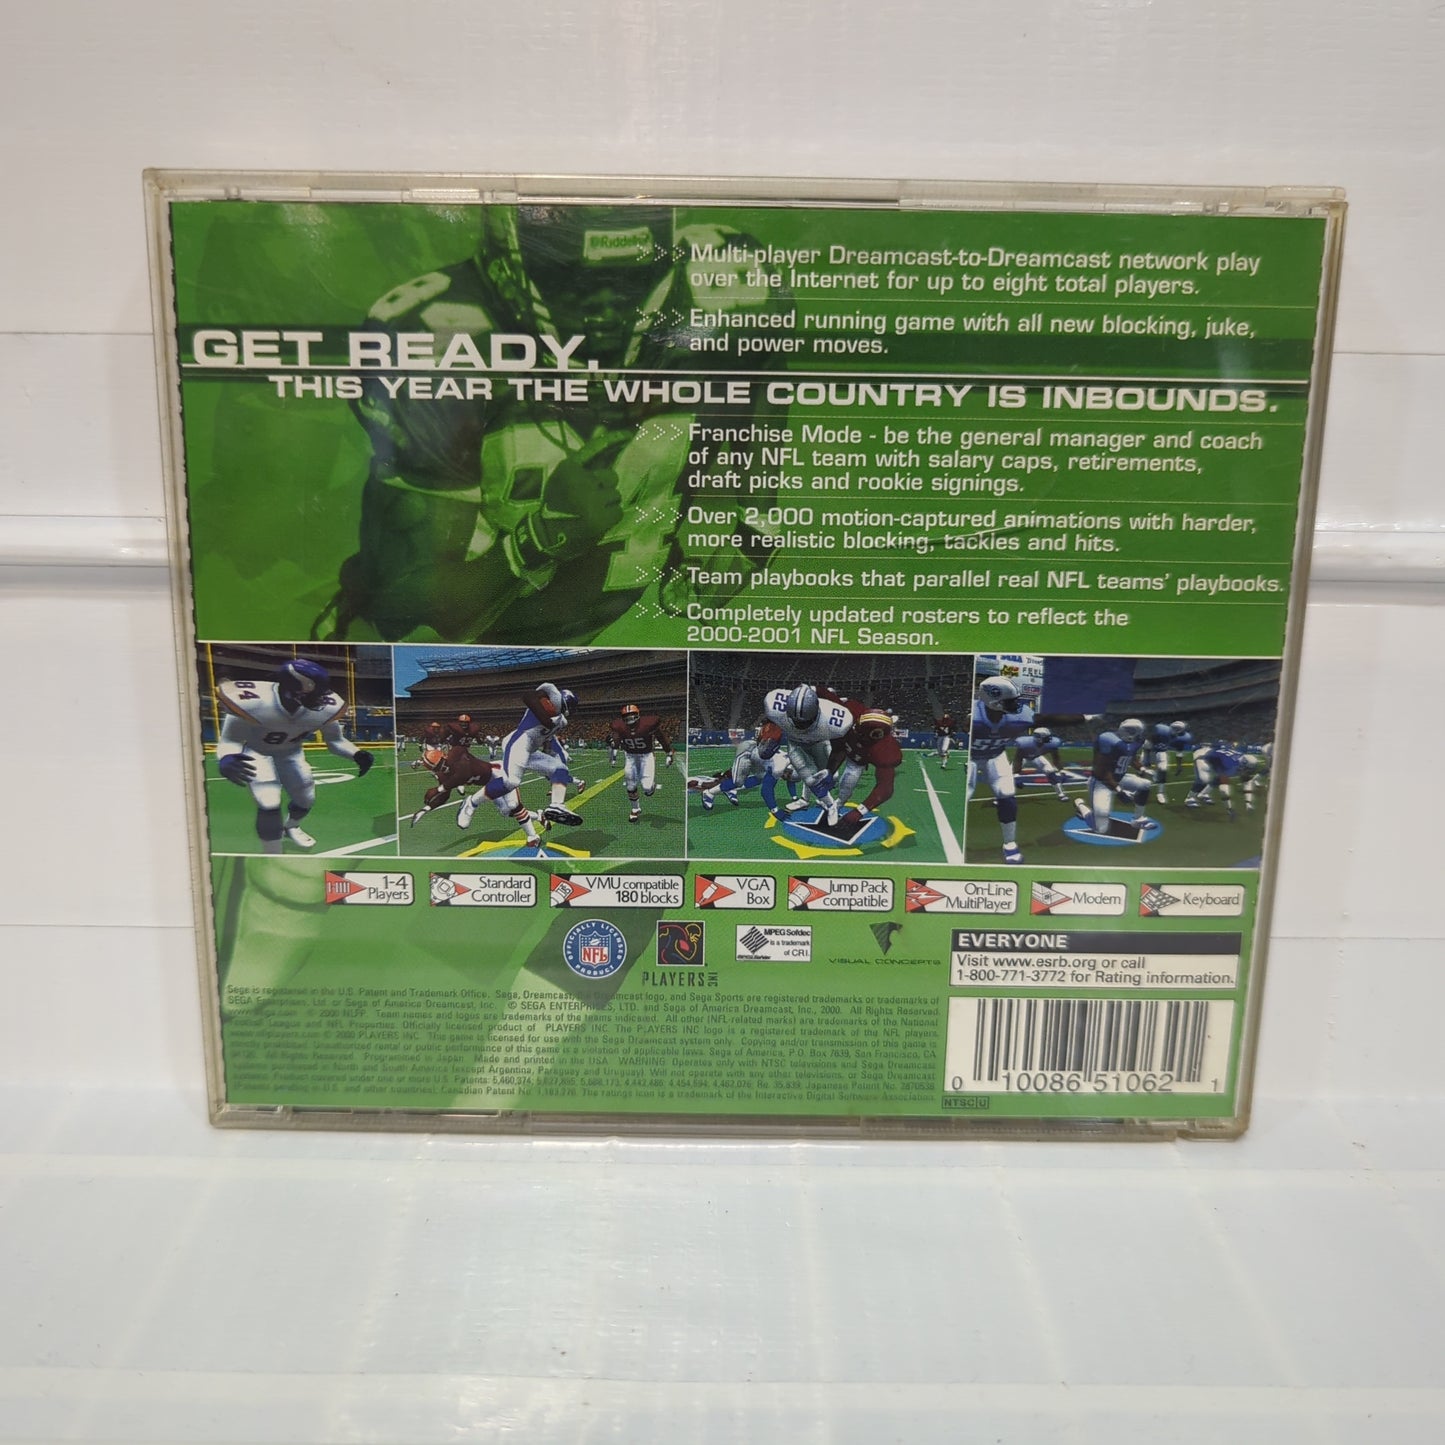 NFL 2K1 - Sega Dreamcast